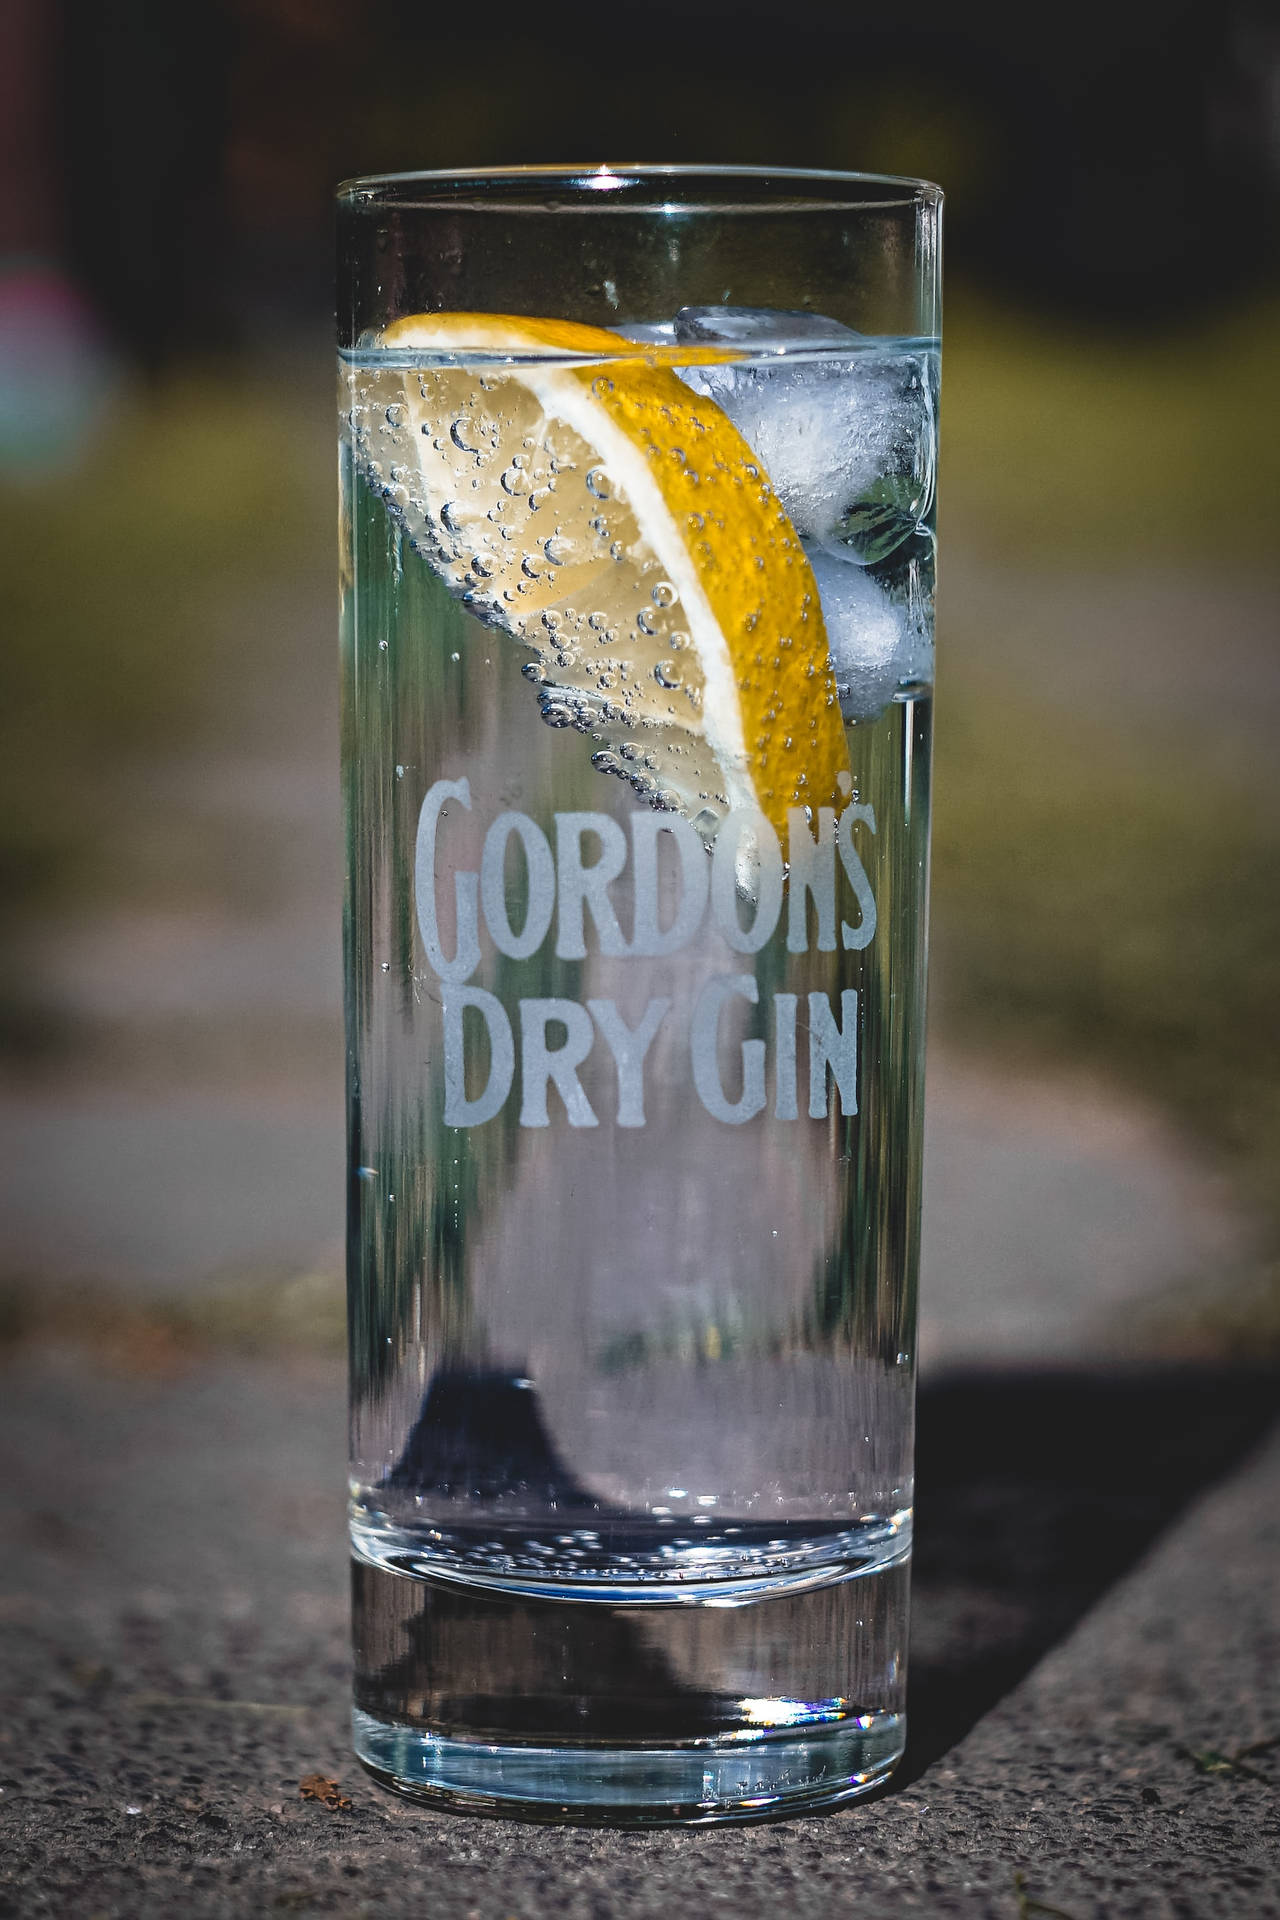 Gordons Dry Gin Wallpaper